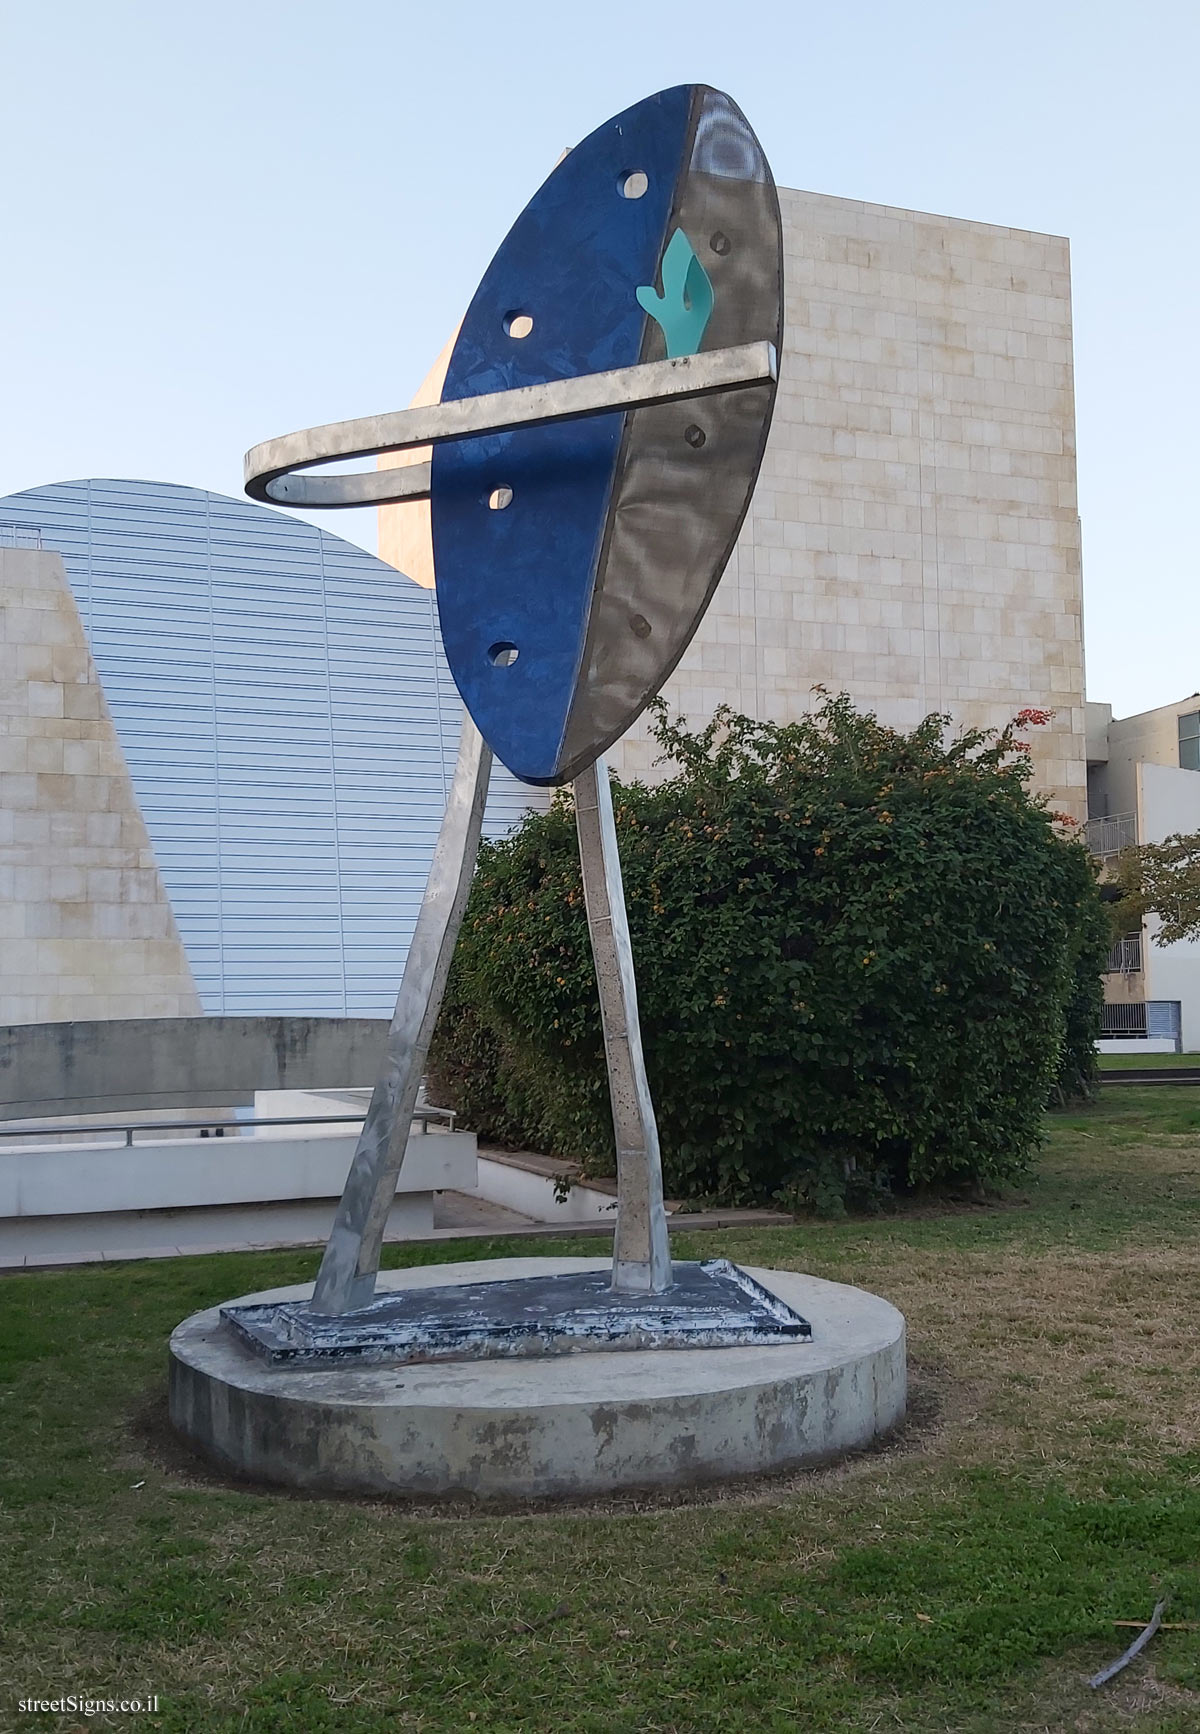 Tel Aviv - "A magnificent step" - Outdoor sculpture by Zigi Ben-Haim - Leonardo da Vinci St 30, Tel Aviv-Yafo, Israel